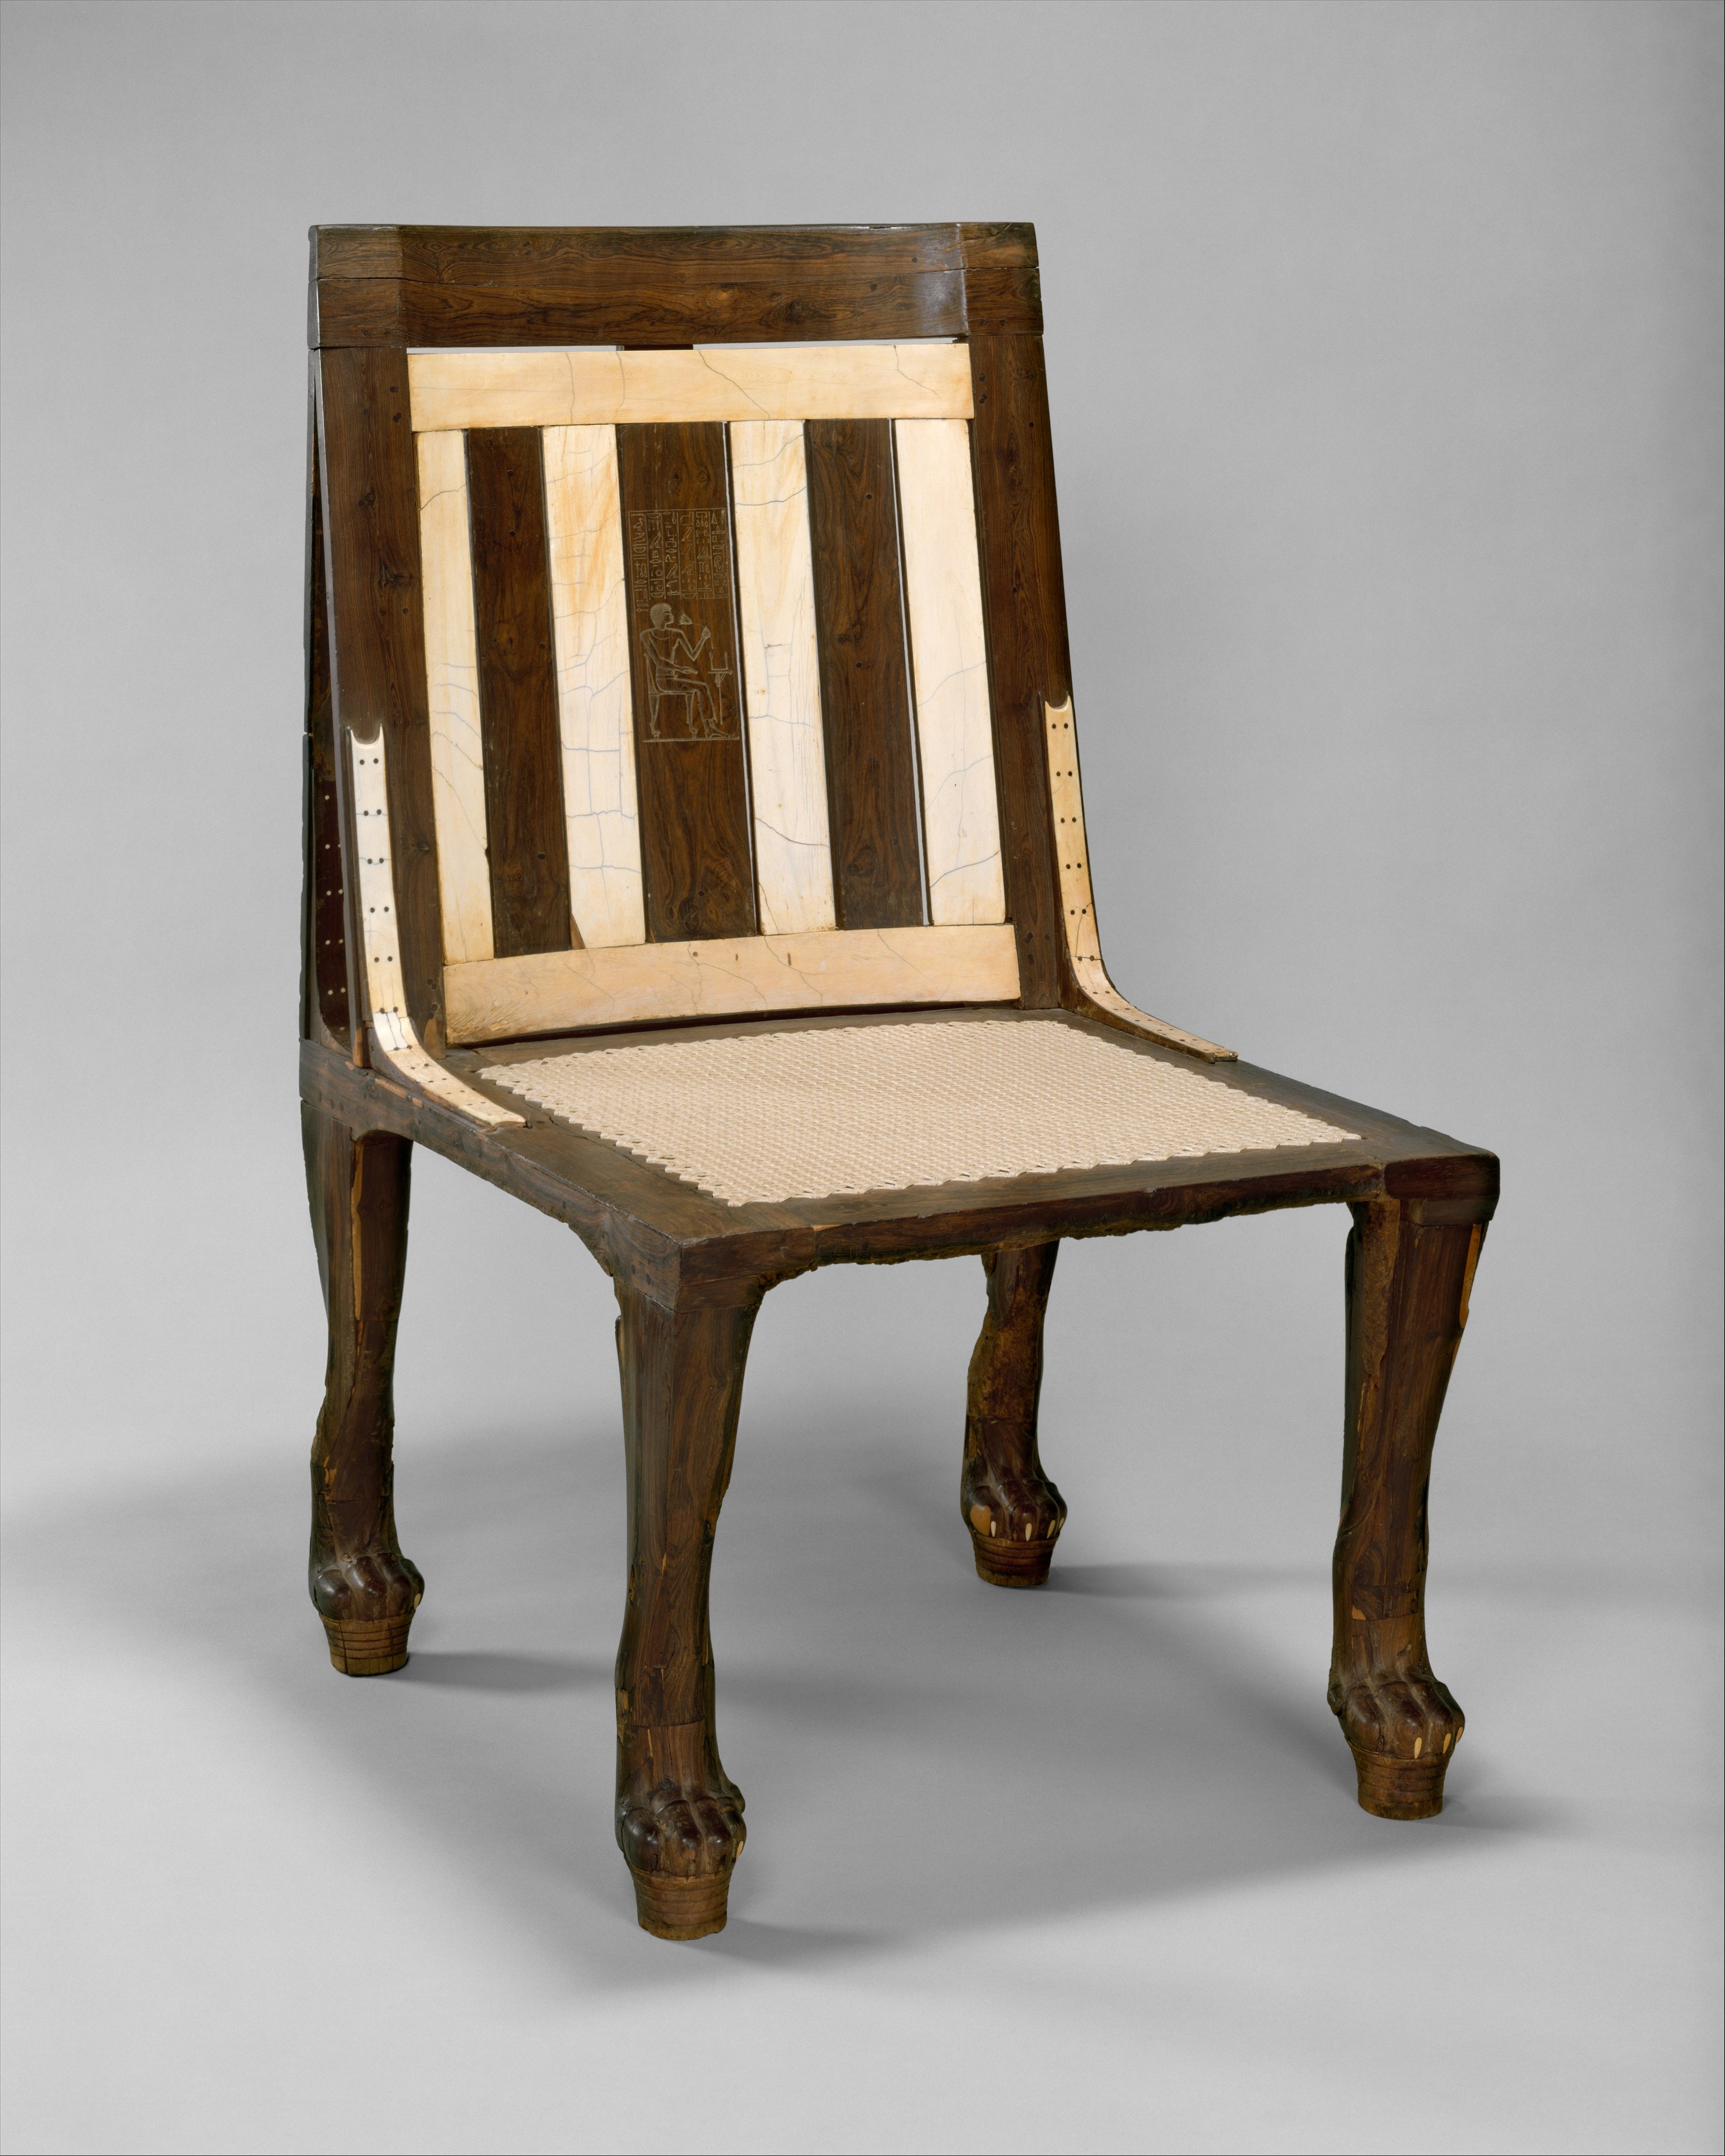 Chair Of Reniseneb New Kingdom The Met